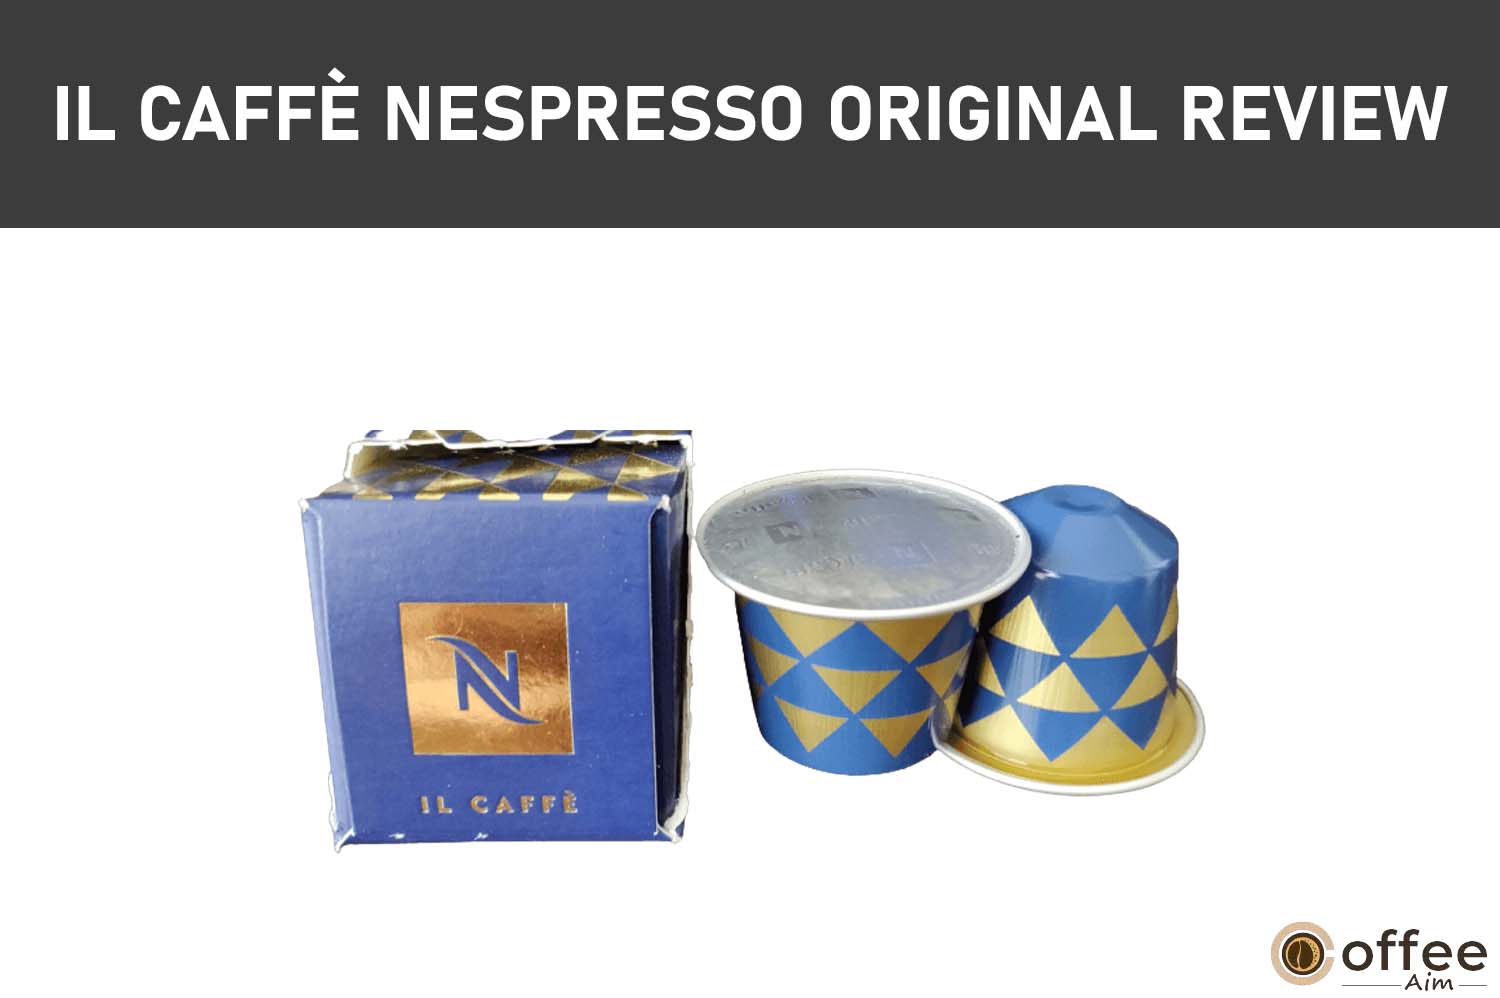 featured image for the article "Il Caffè Nespresso Original Review"